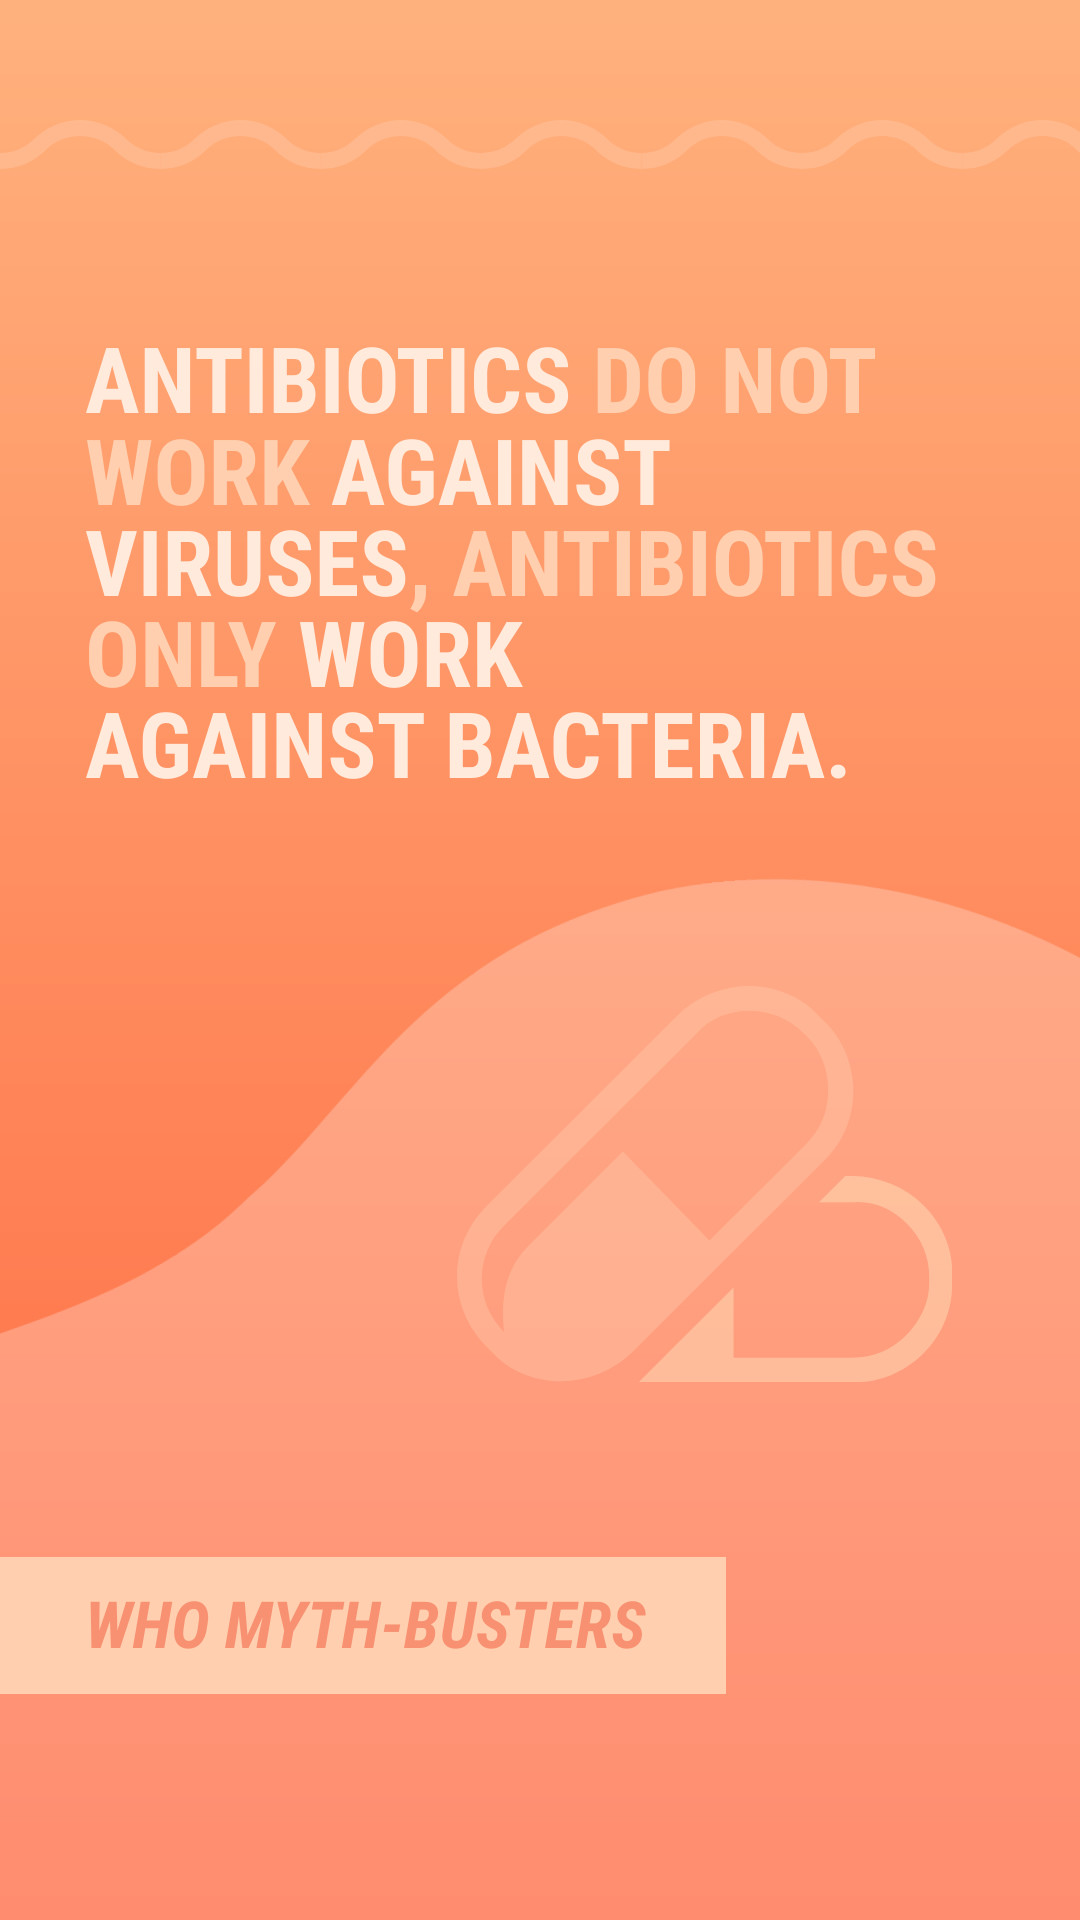 Myth COVID-19 Antibiotics